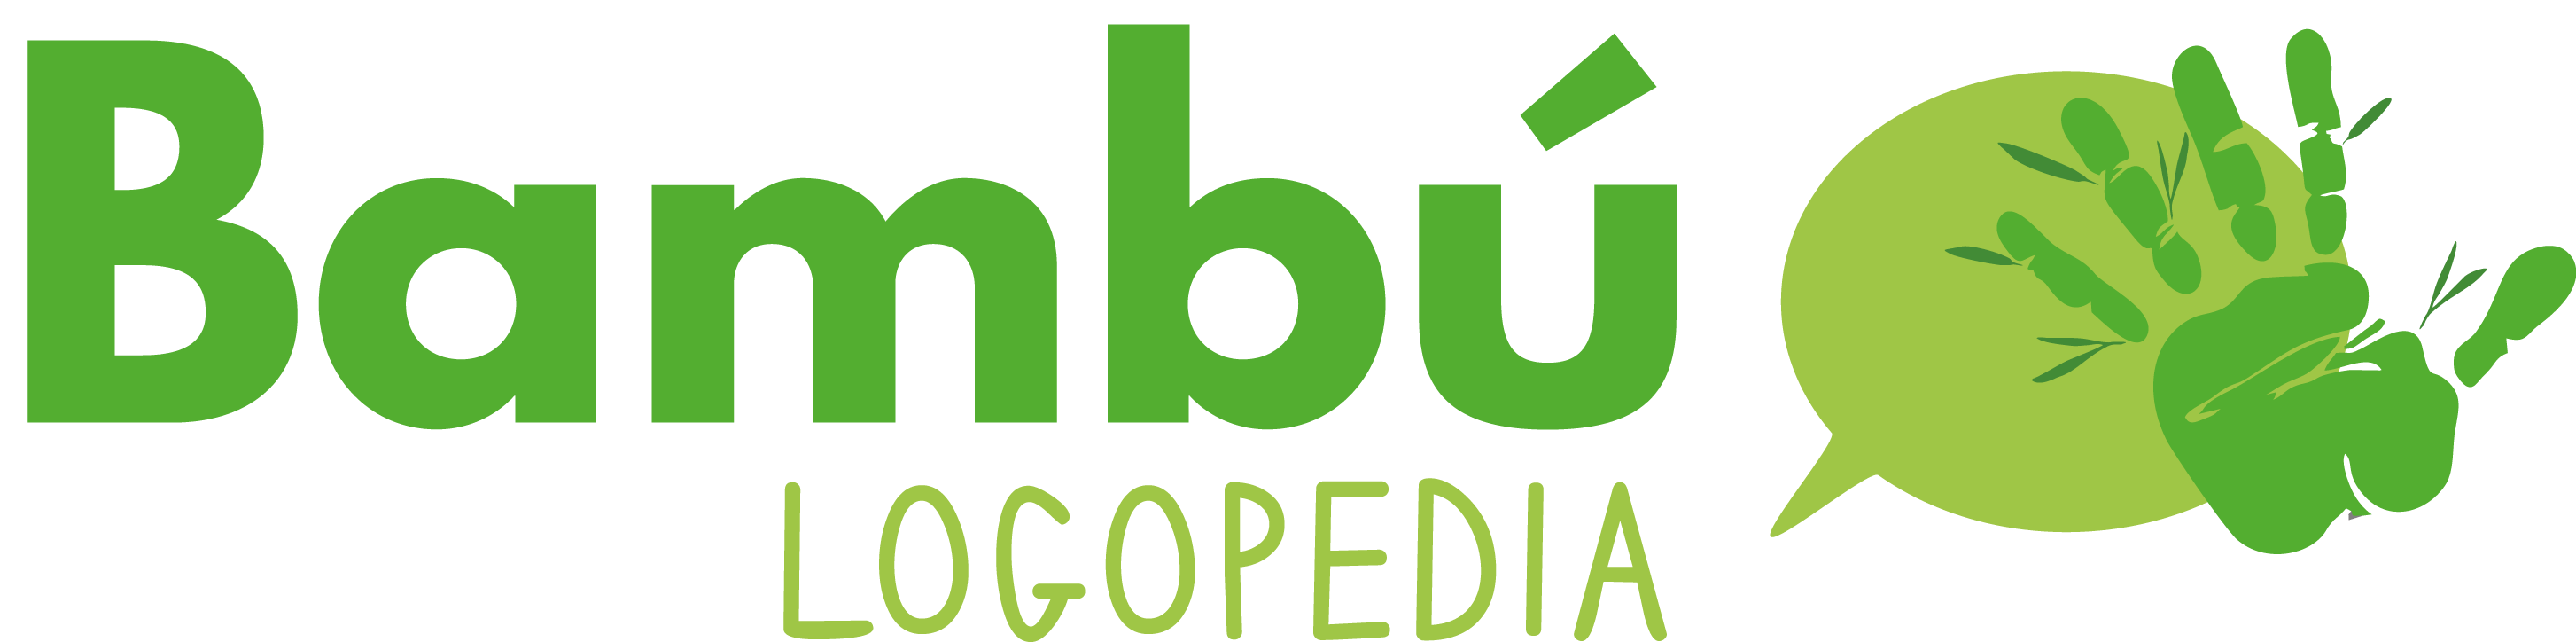 Bambú logopedia